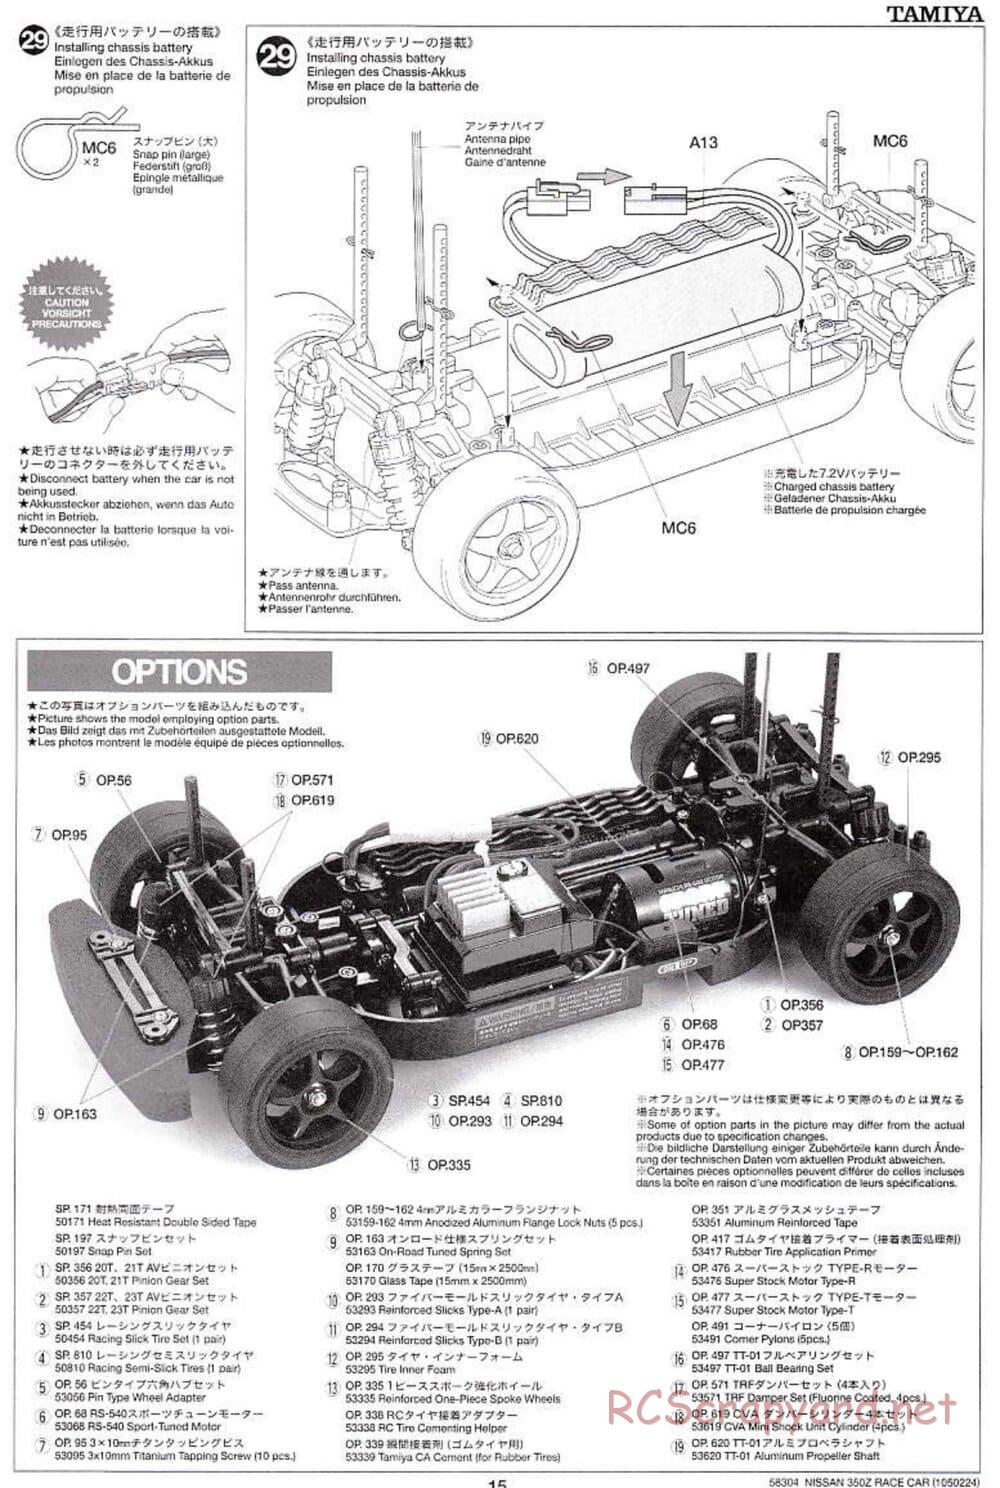 Tamiya - Nissan 350Z Race-Car - TT-01 Chassis - Manual - Page 15